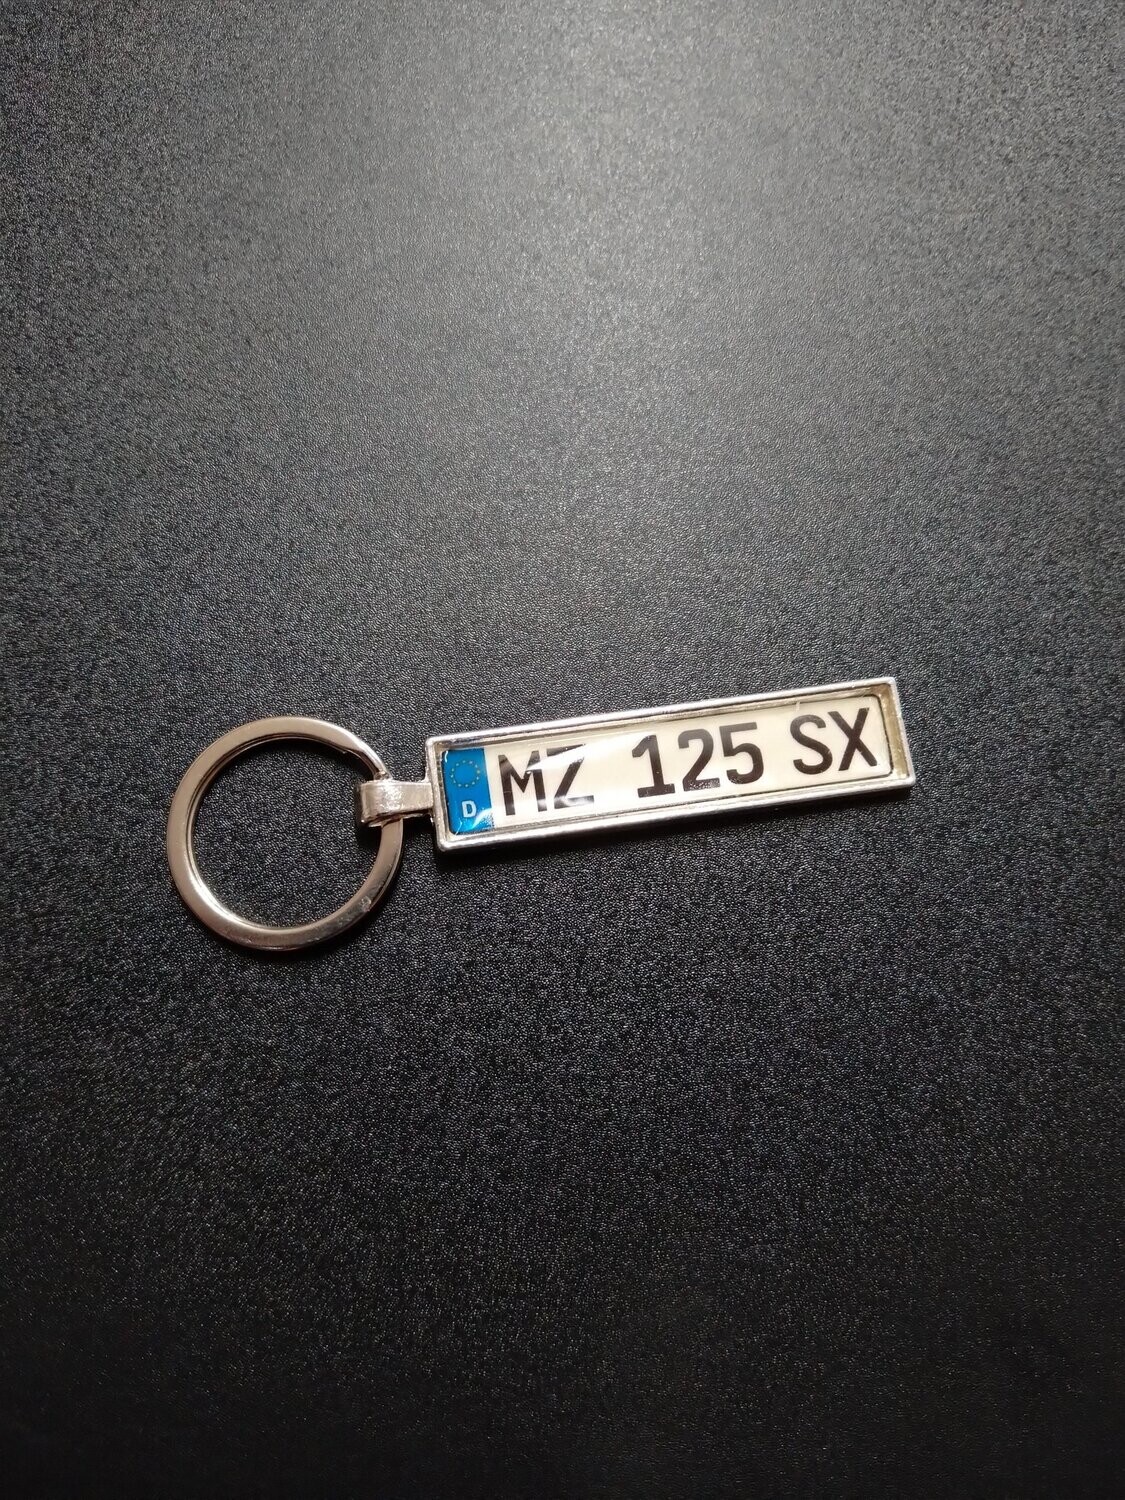 Schlüsselanhänger "MZ 125 SX"